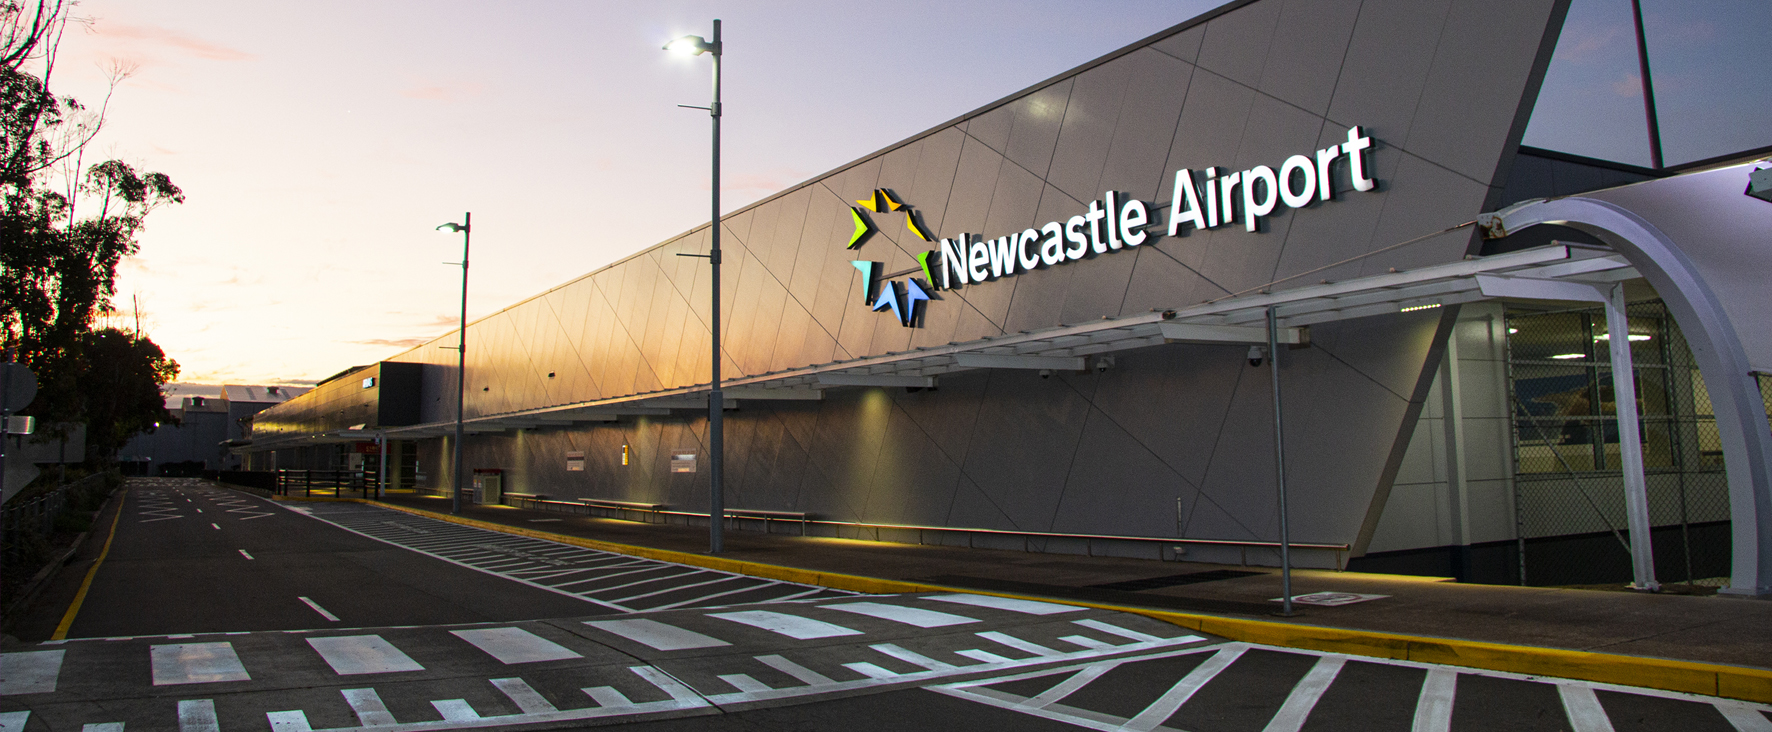 newcastle airport in australia